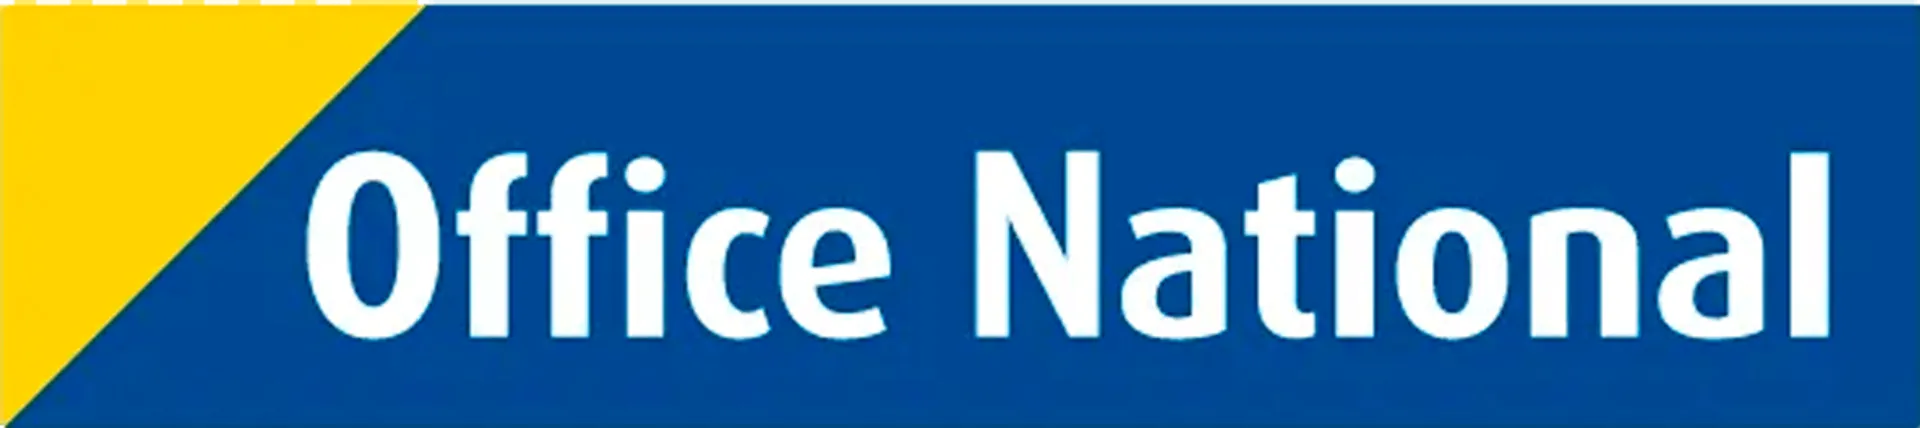 OFFICE NATIONAL logo